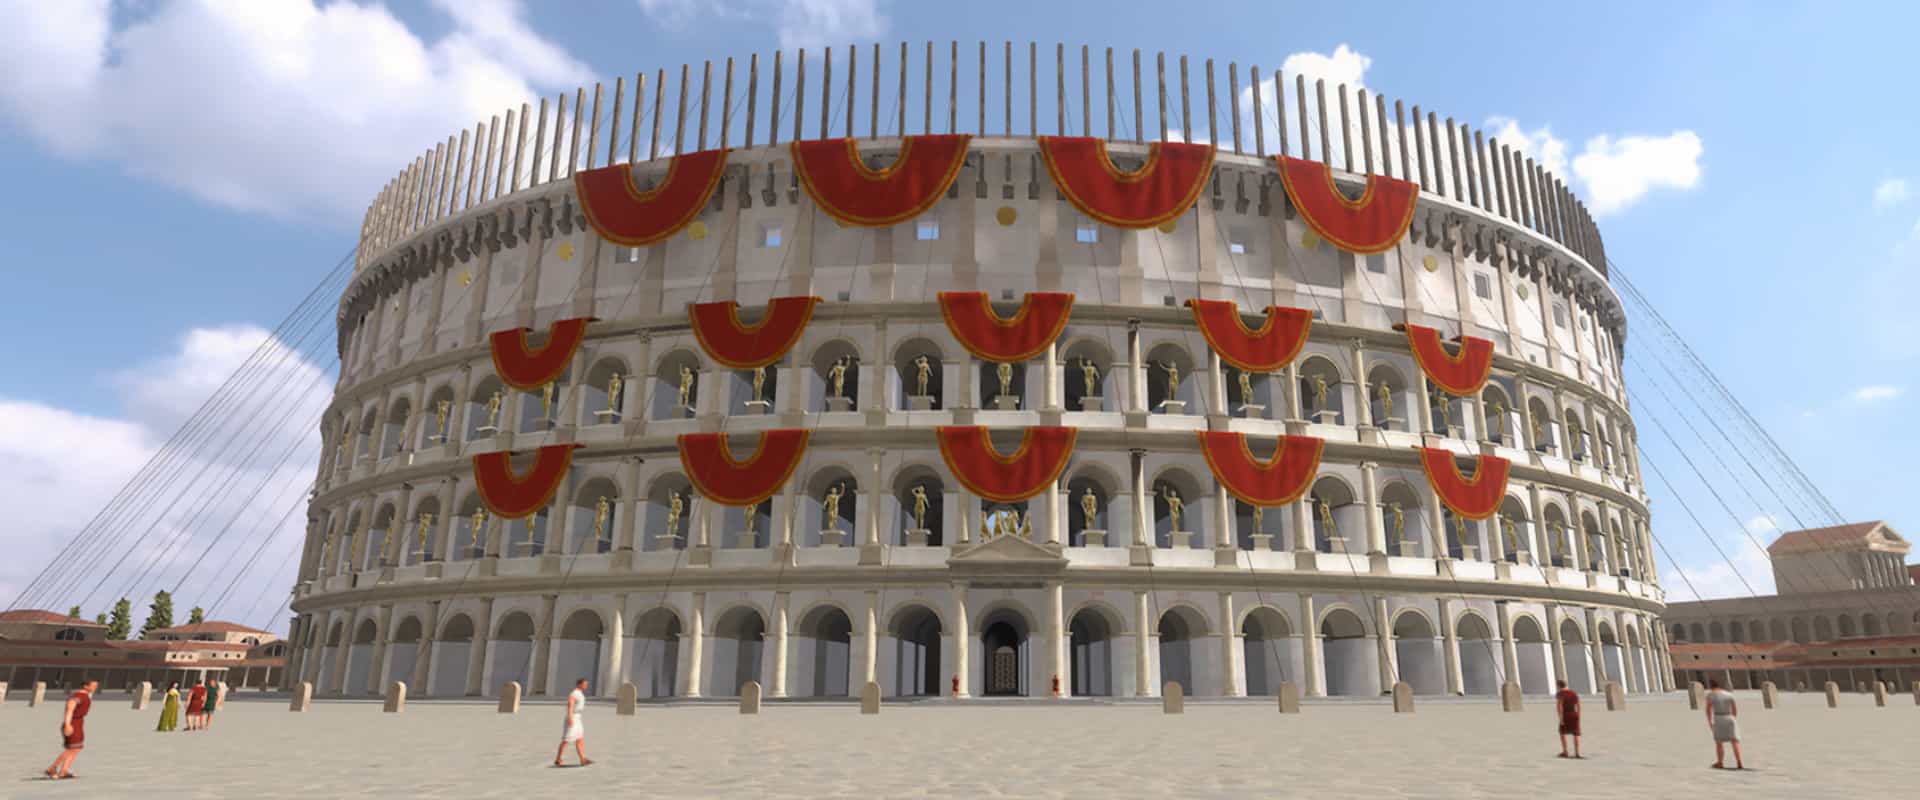 virtual tour of colosseum